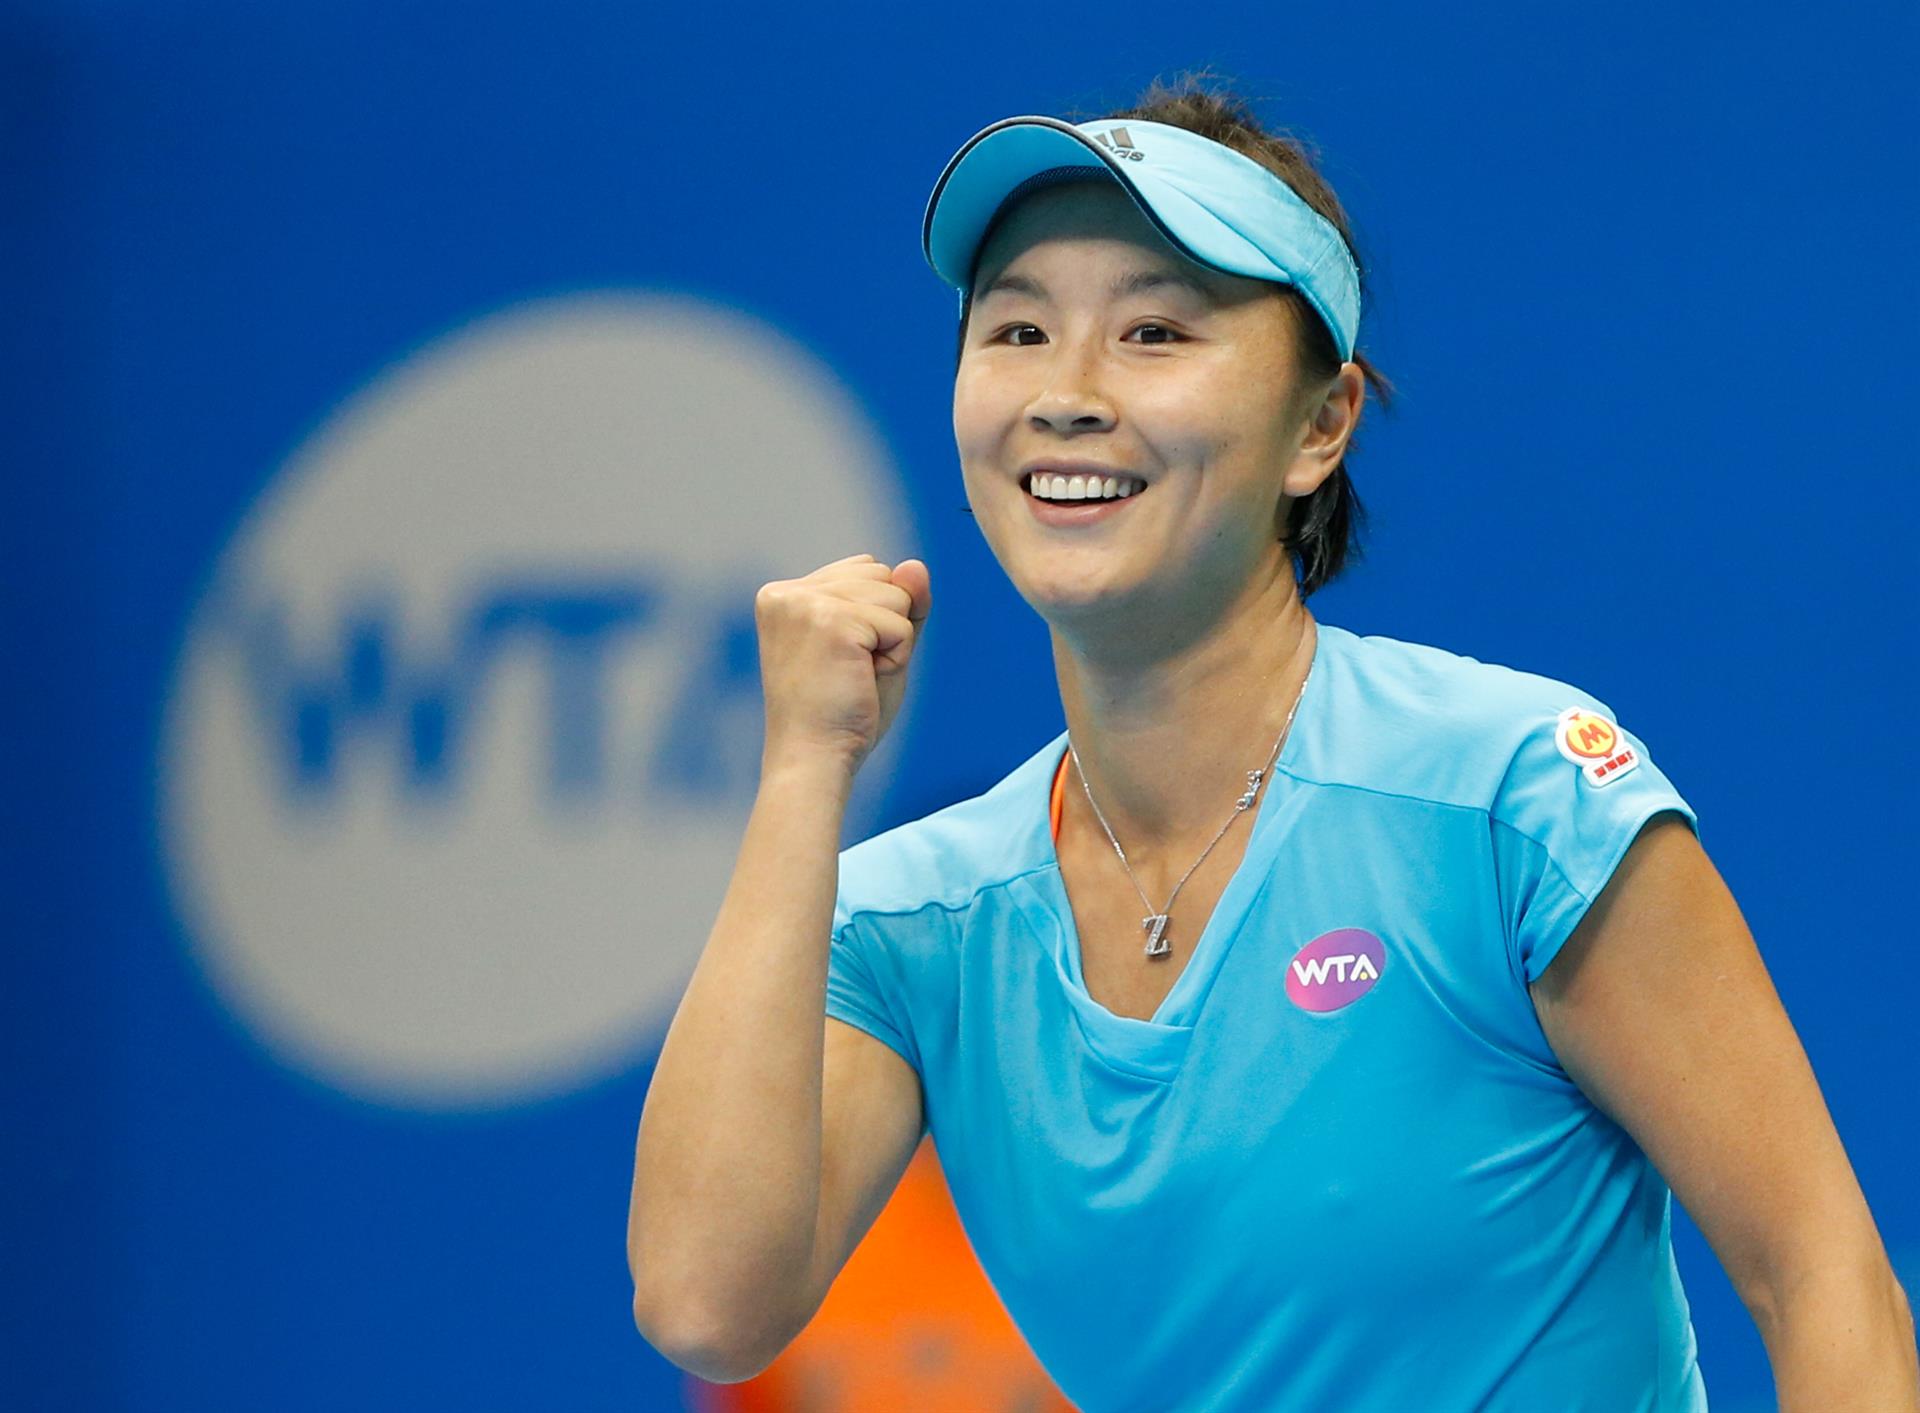 La tenista Peng Shuai, en una imagen de archivo. EFE/EPA/RITCHIE B. TONGO